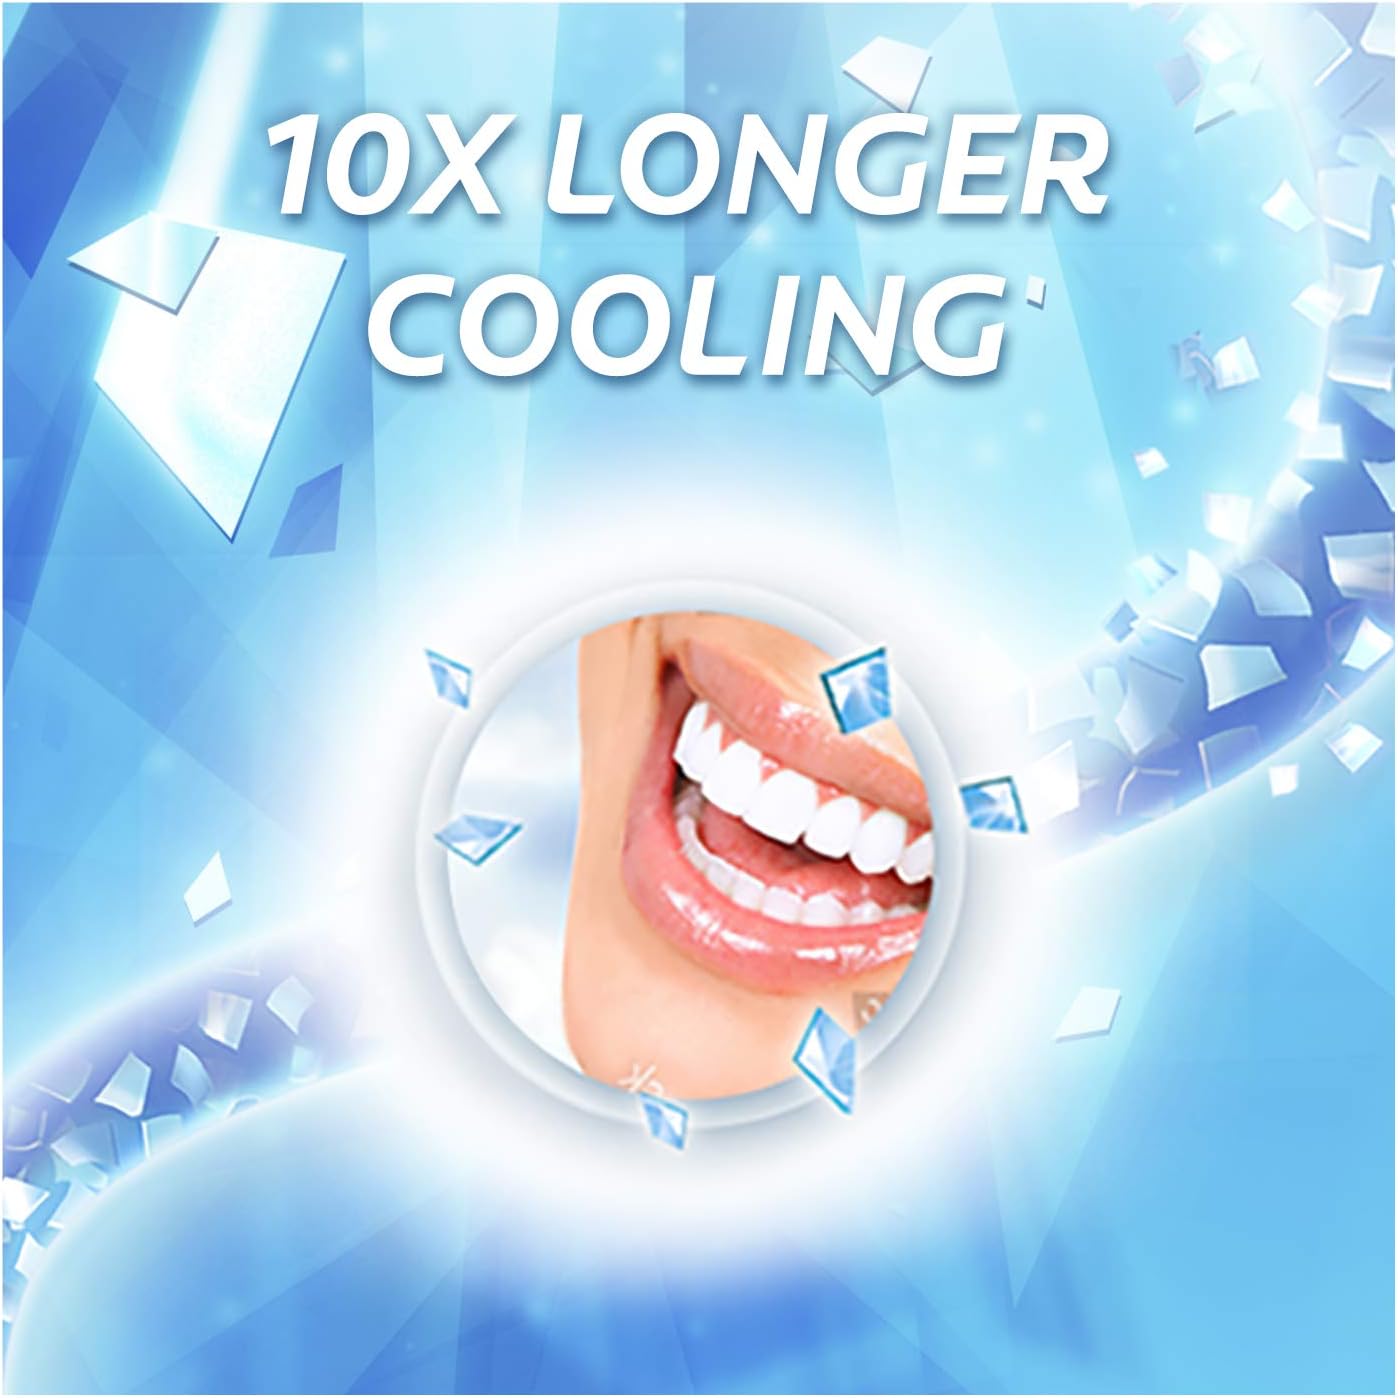 Colgate Max Fresh Cool Mint Gel Toothpaste – 4 X 75Ml